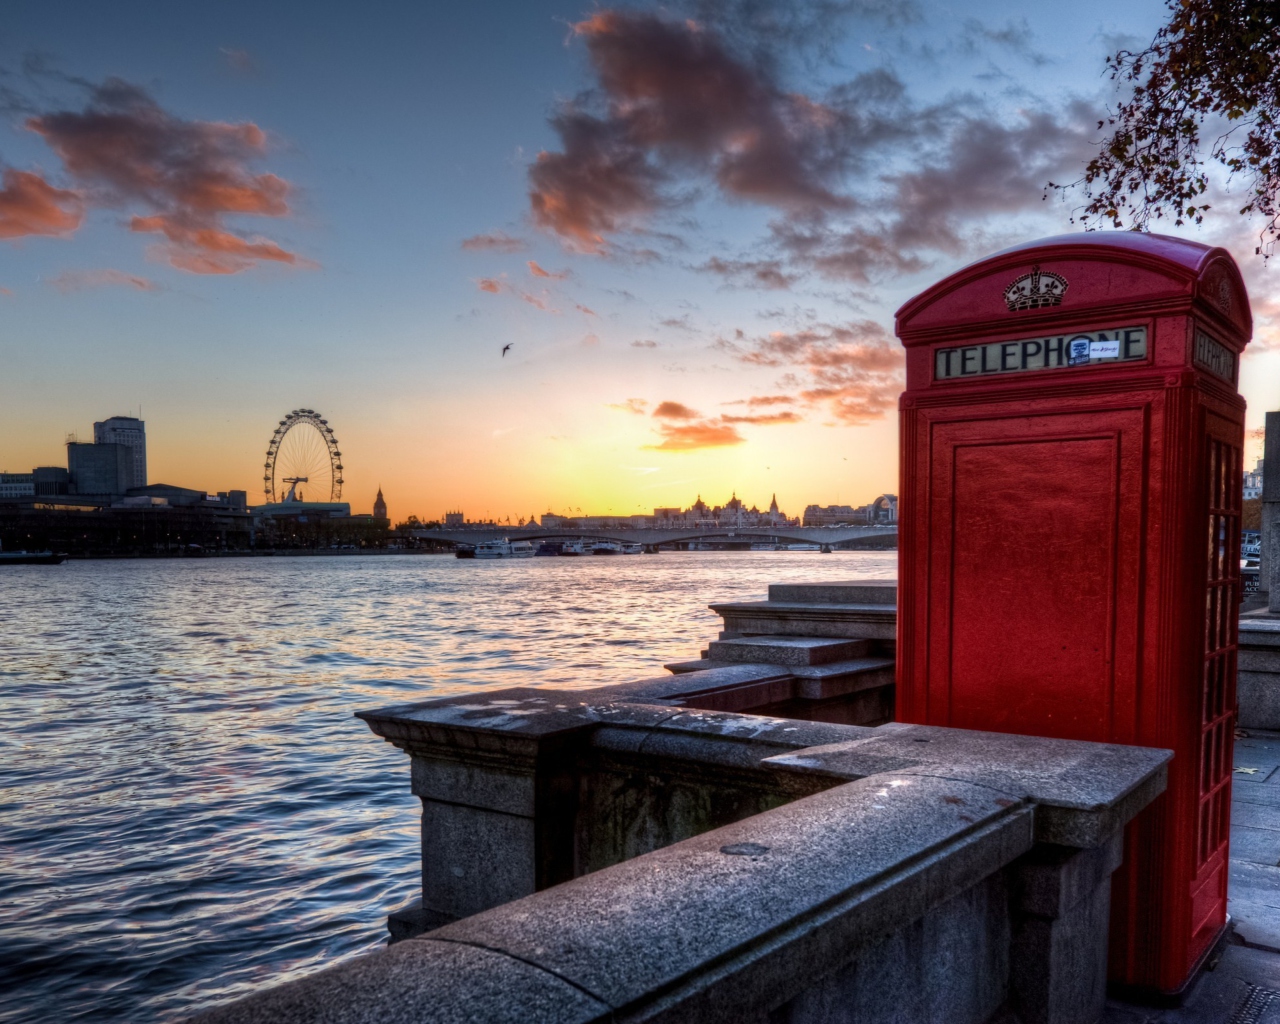 Das England Phone Booth in London Wallpaper 1280x1024